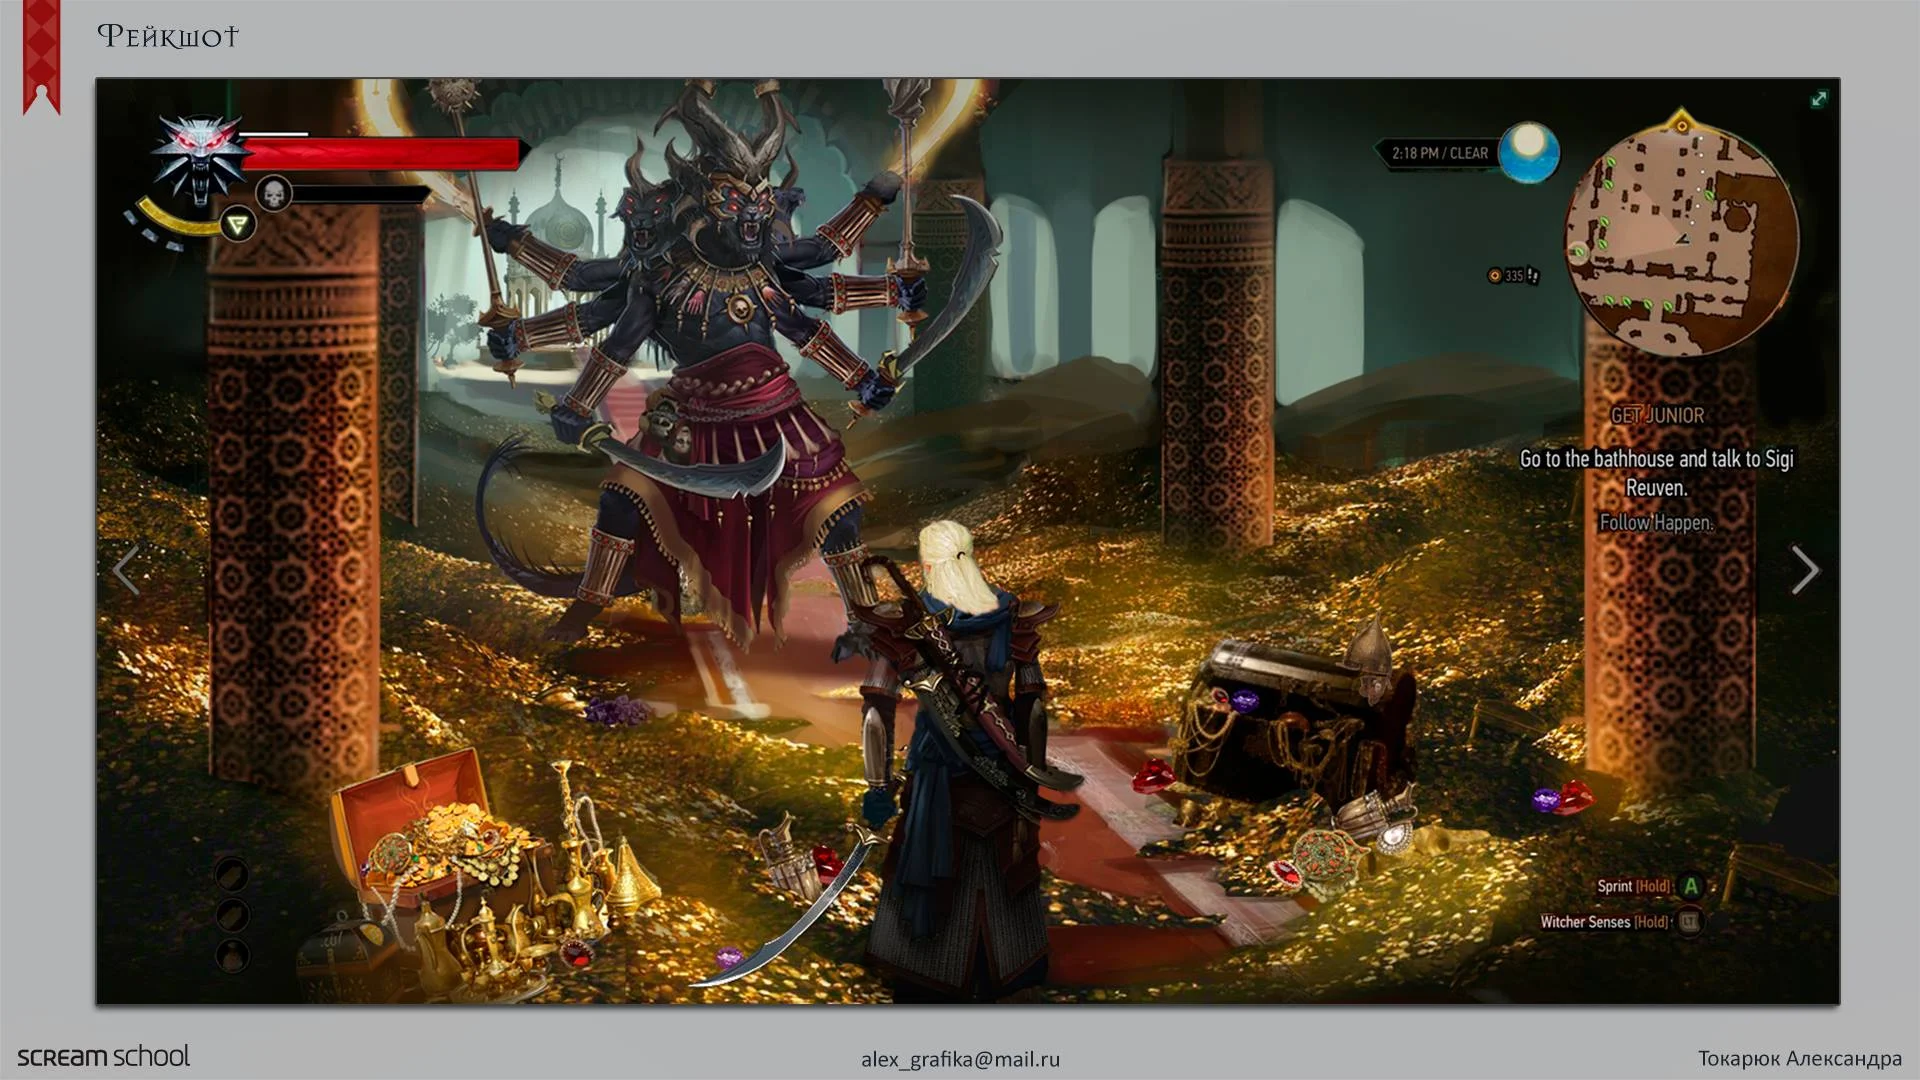 Потрясающий фанатский концепт DLC для «Ведьмак 3». CD Projekt, ау! - фото 12